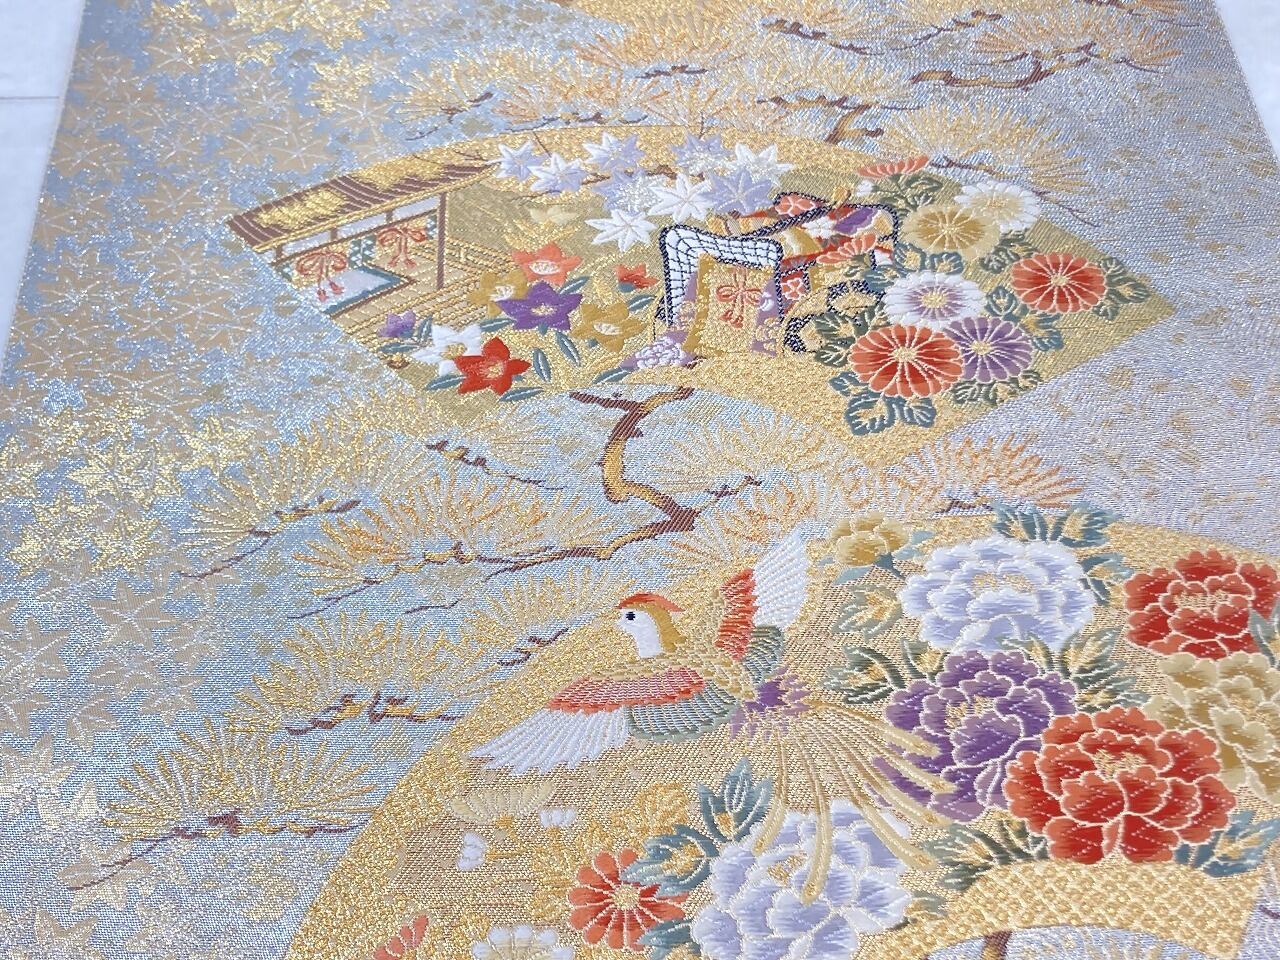 唐織り 松寿扇面文 四季の花々 袋帯 金糸 正絹 シルバー 赤 紫 509